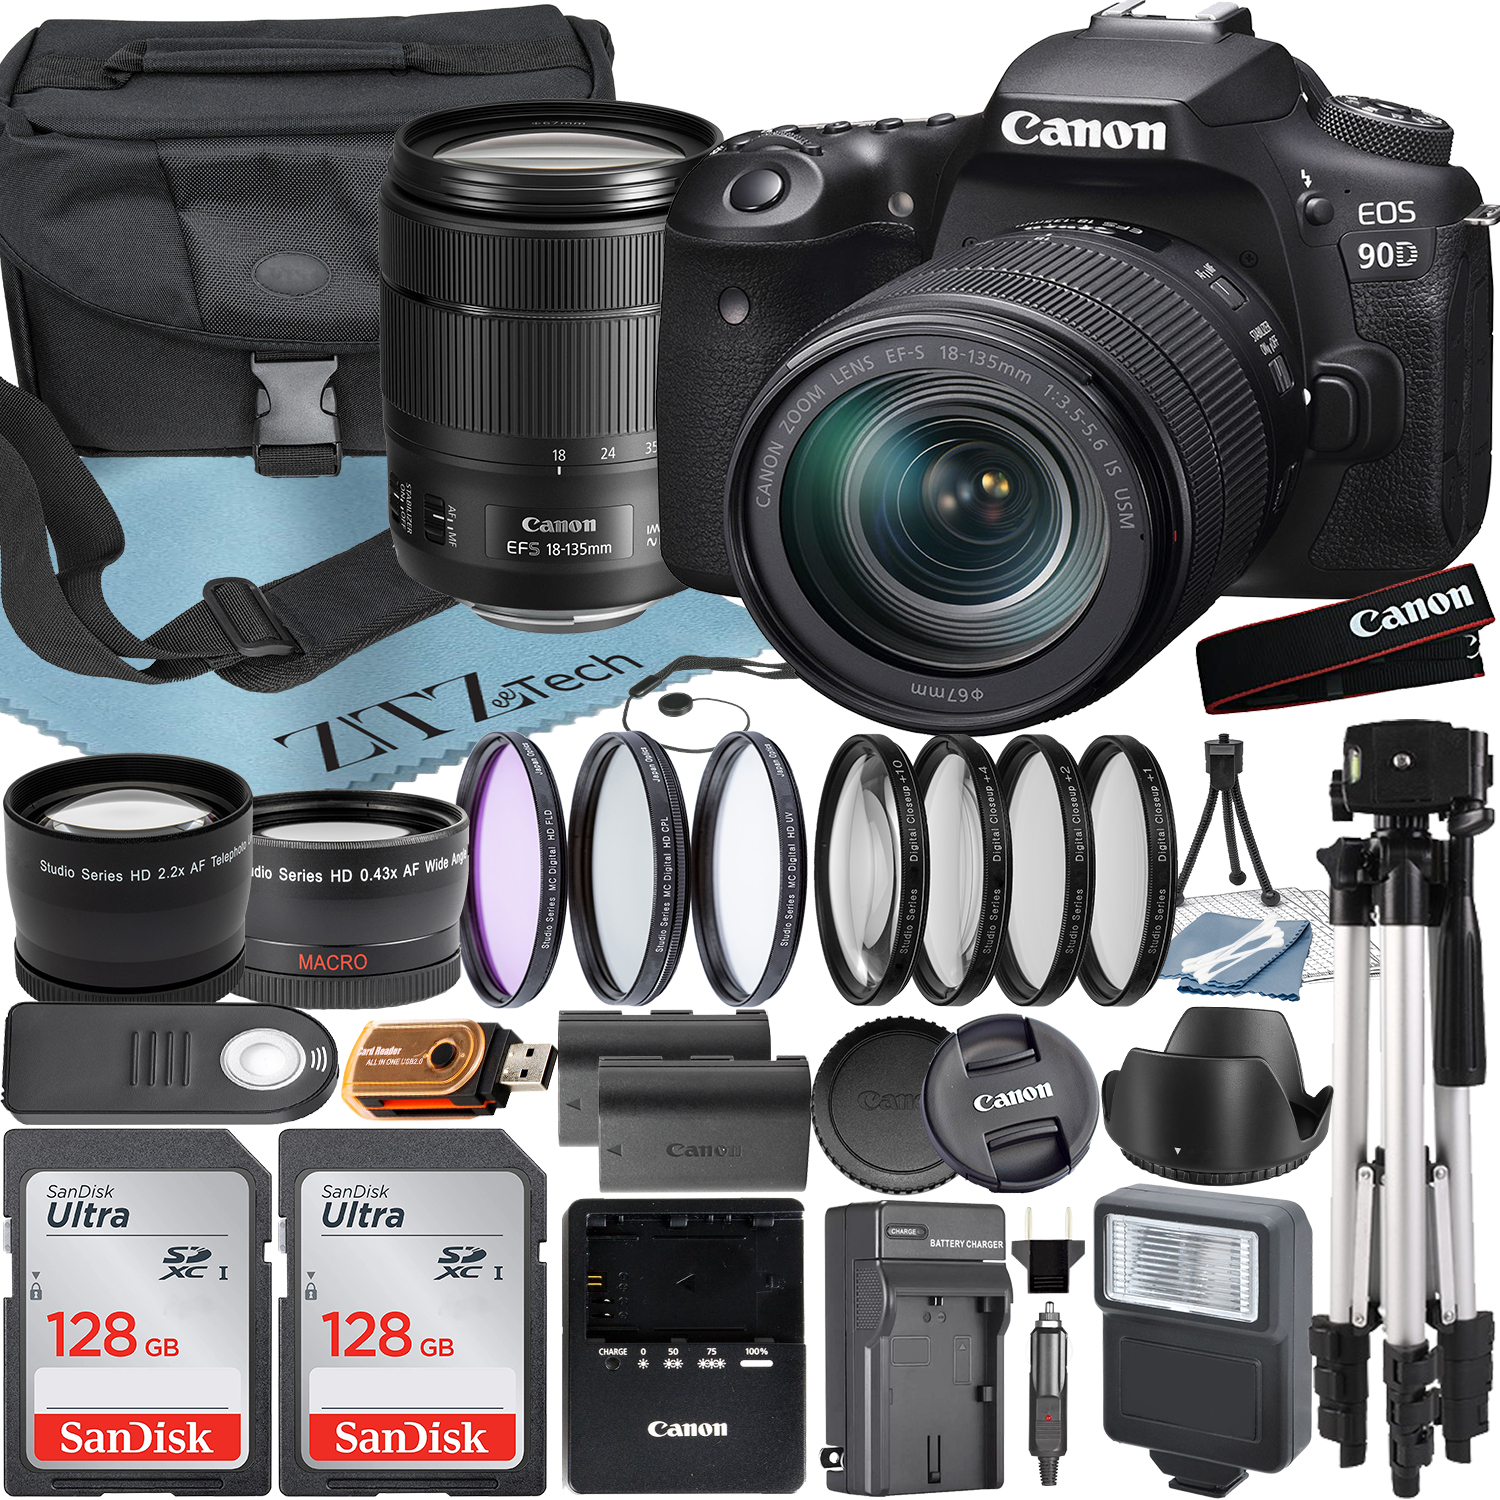 Canon EOS 90D DSLR Camera with 18-135mm IS USM Lens + 2 Pieces SanDisk 128GB Card + Case + Telephoto + Tripod + ZeeTech Accessory Bundle